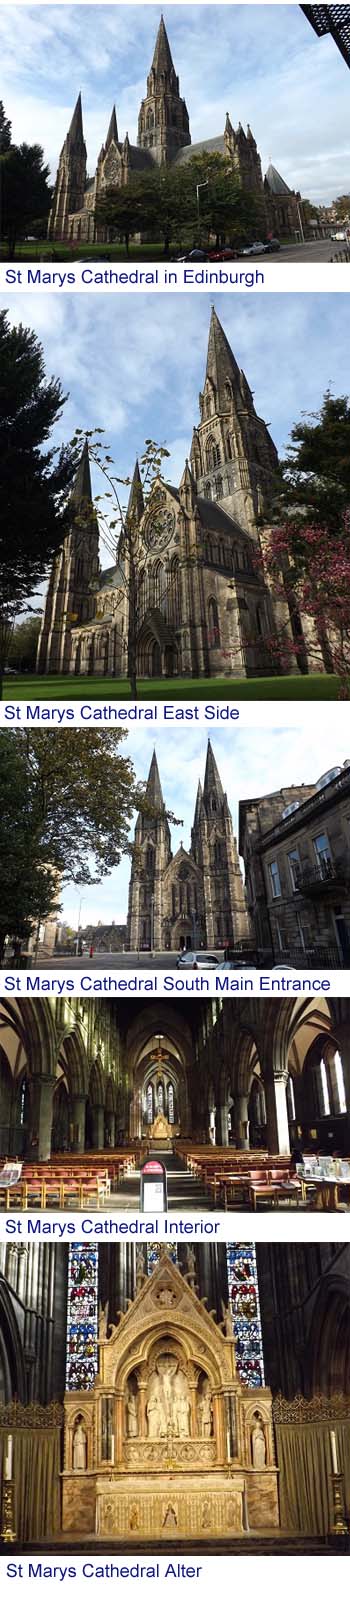 St Marys Cathedral Edinburgh Images